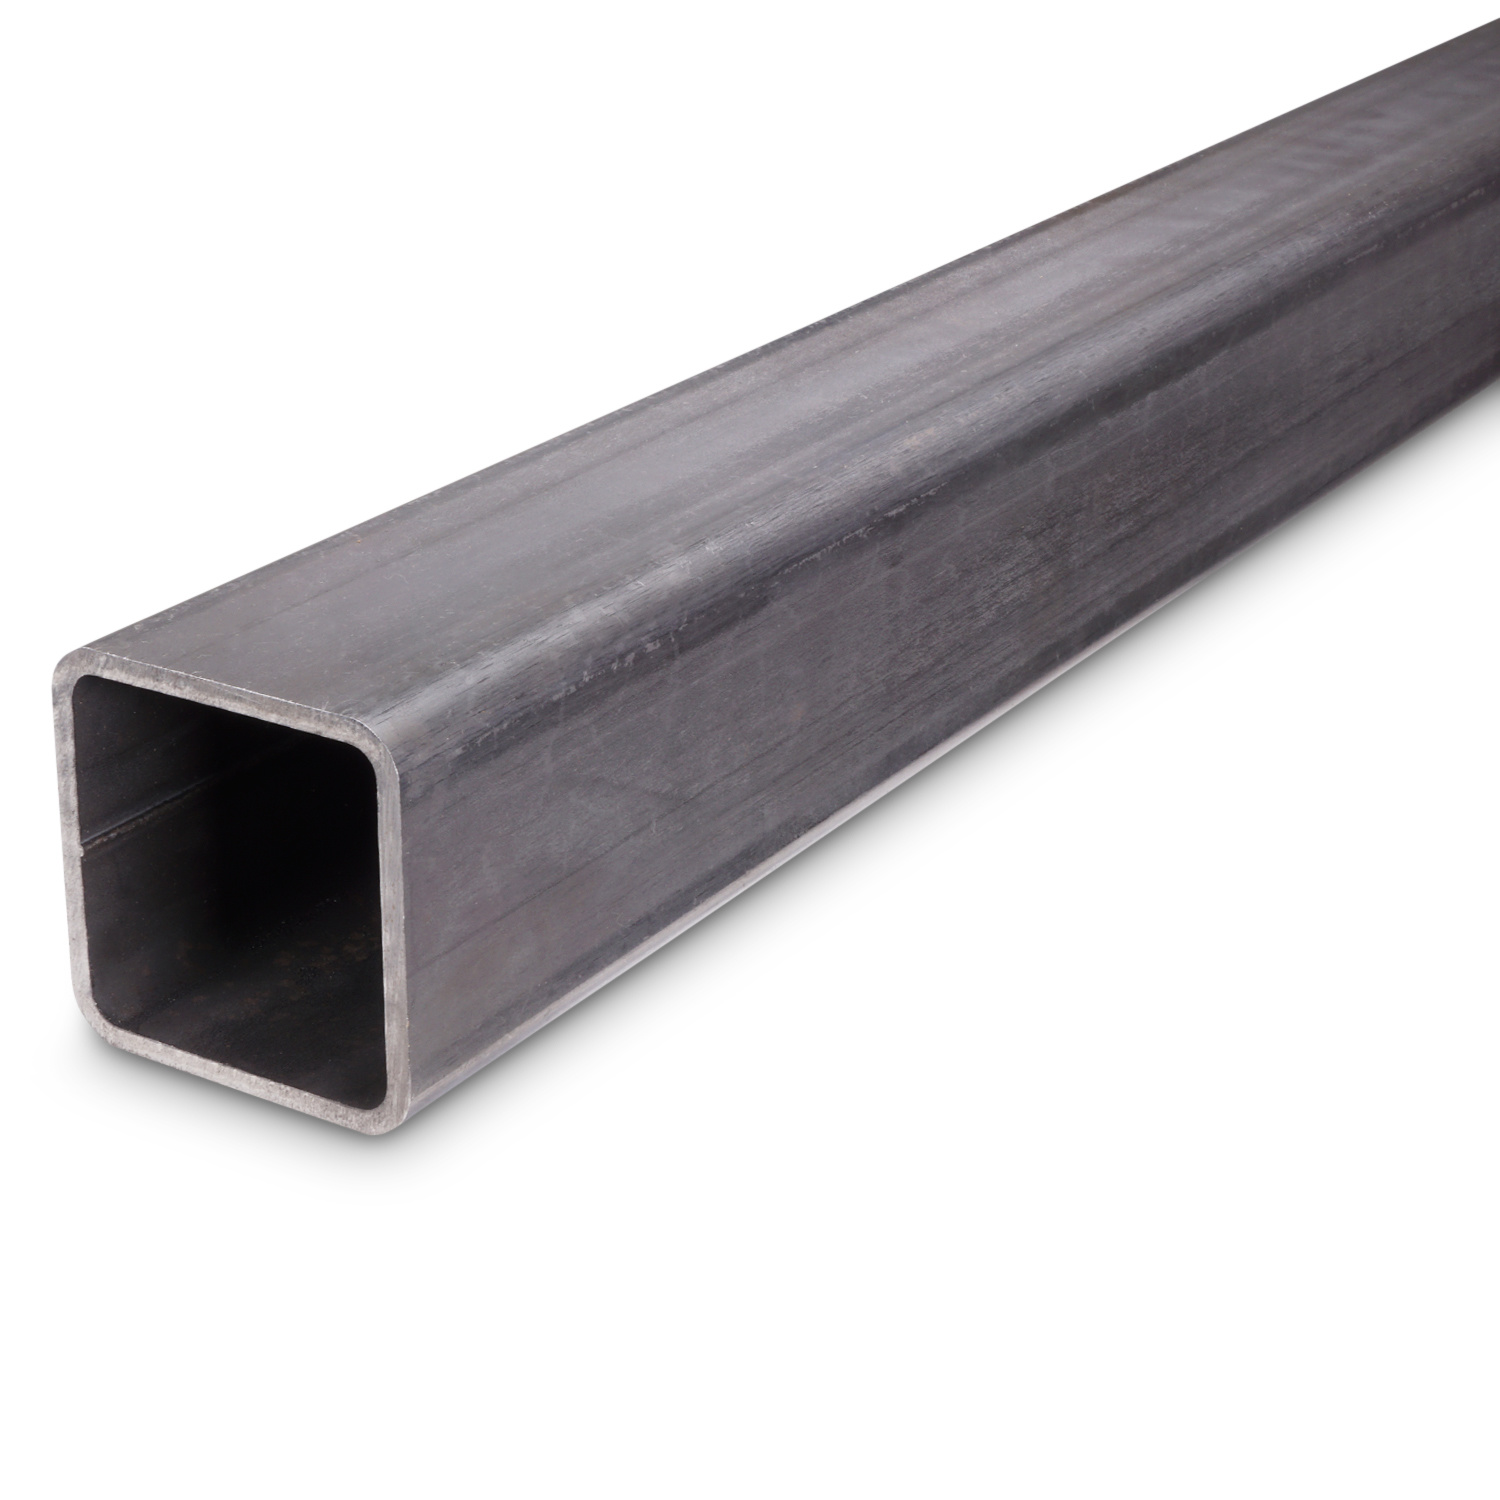  Koker staal - vierkante buis kokerprofiel KGV staal - S235JR - 70x70x4 MM